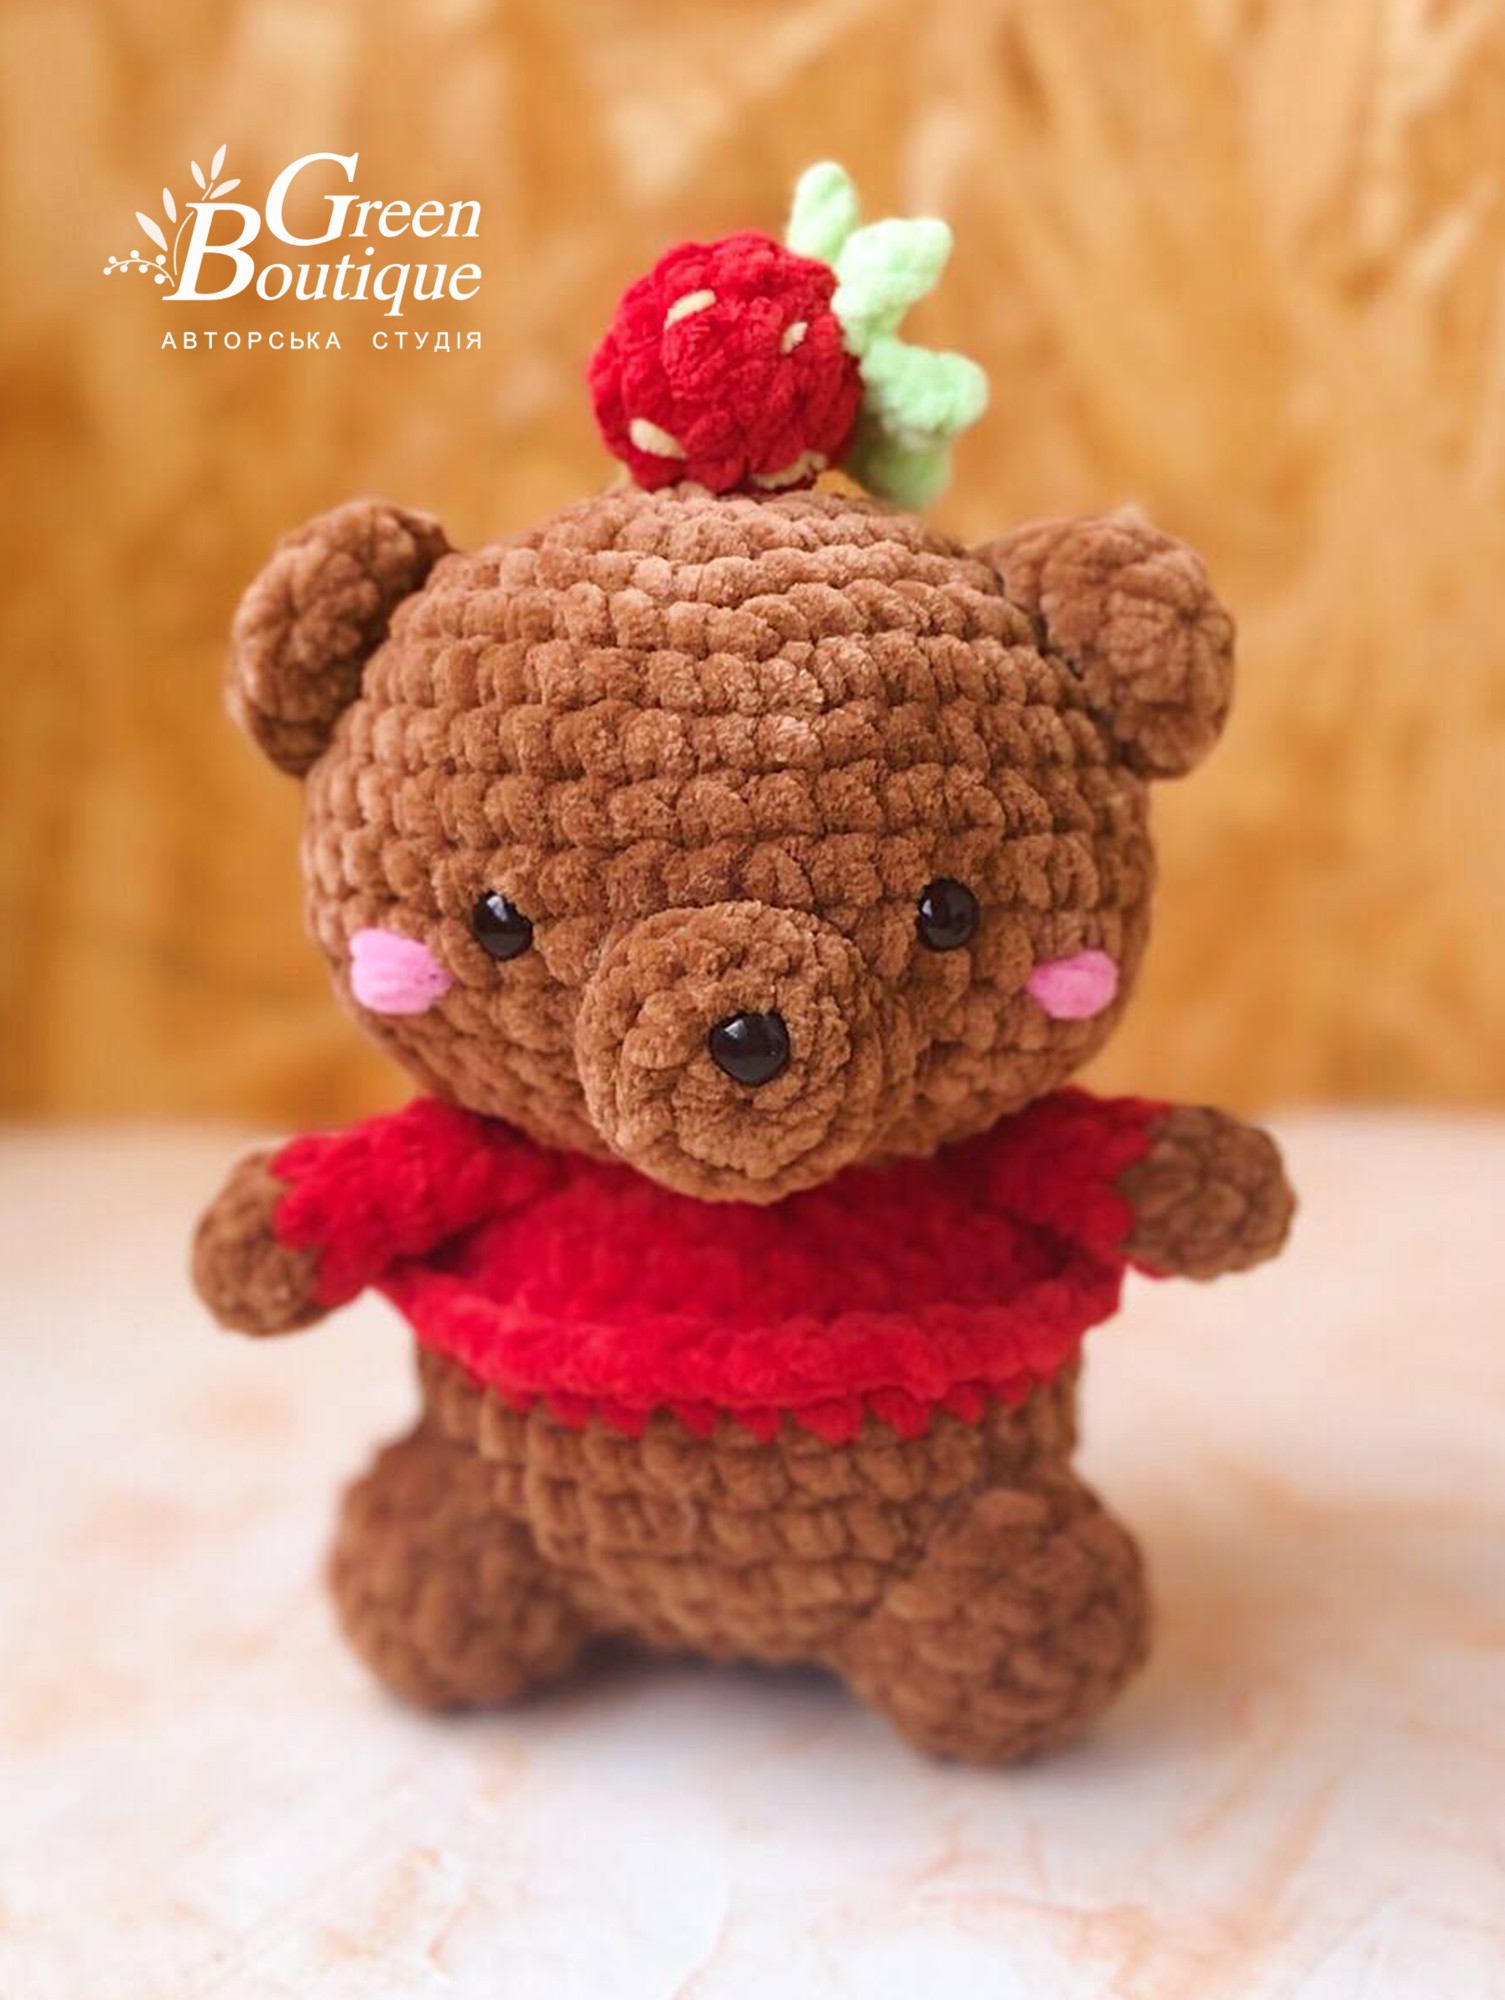 Plush toy bear strawberry